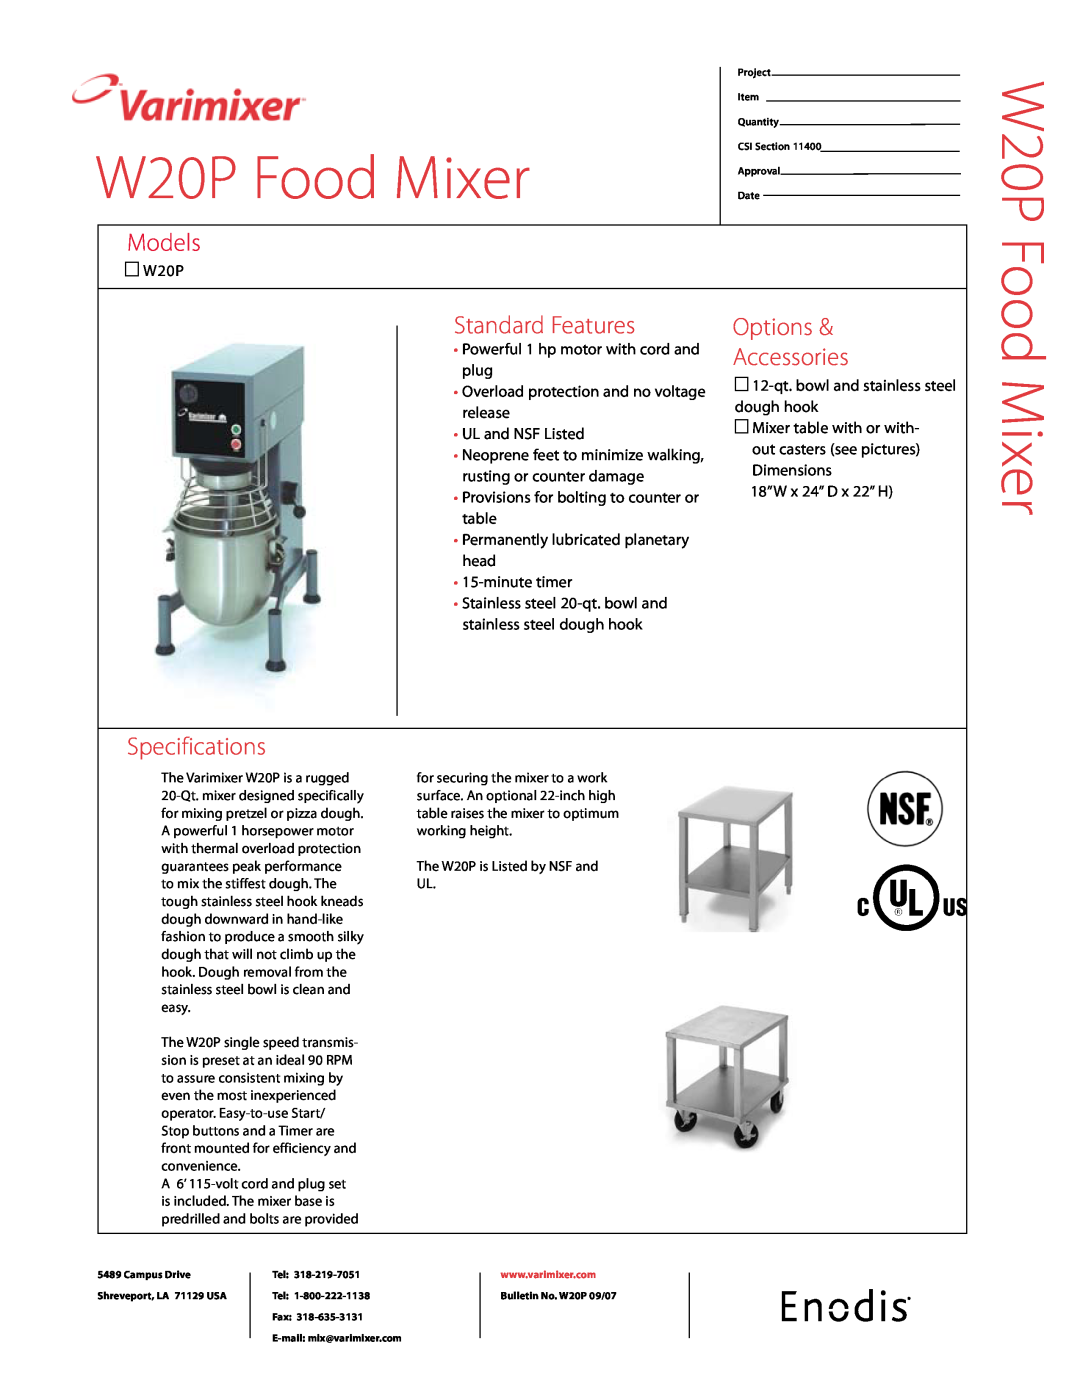 Varimixer specifications W20P Food Mixer, Models, Standard Features, Options, Accessories, Specifications 